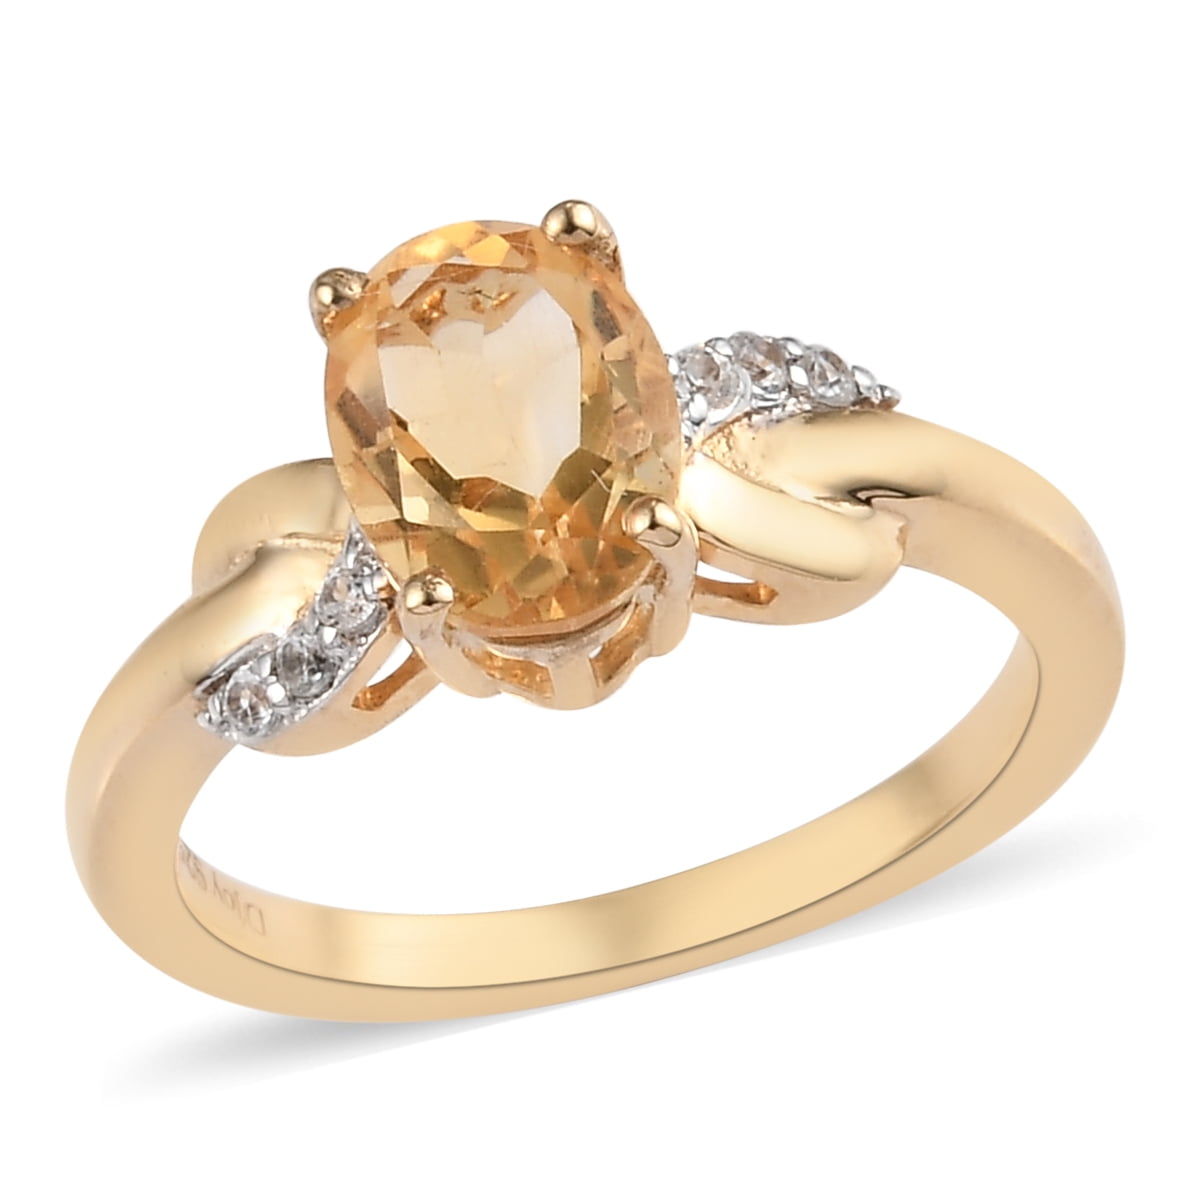 Silver Plated Designer Ring Girls Jewelry Sale Gemstone Ring Green Onyx Ring Bulk Ring Supply Anniversary Gift Women Ring